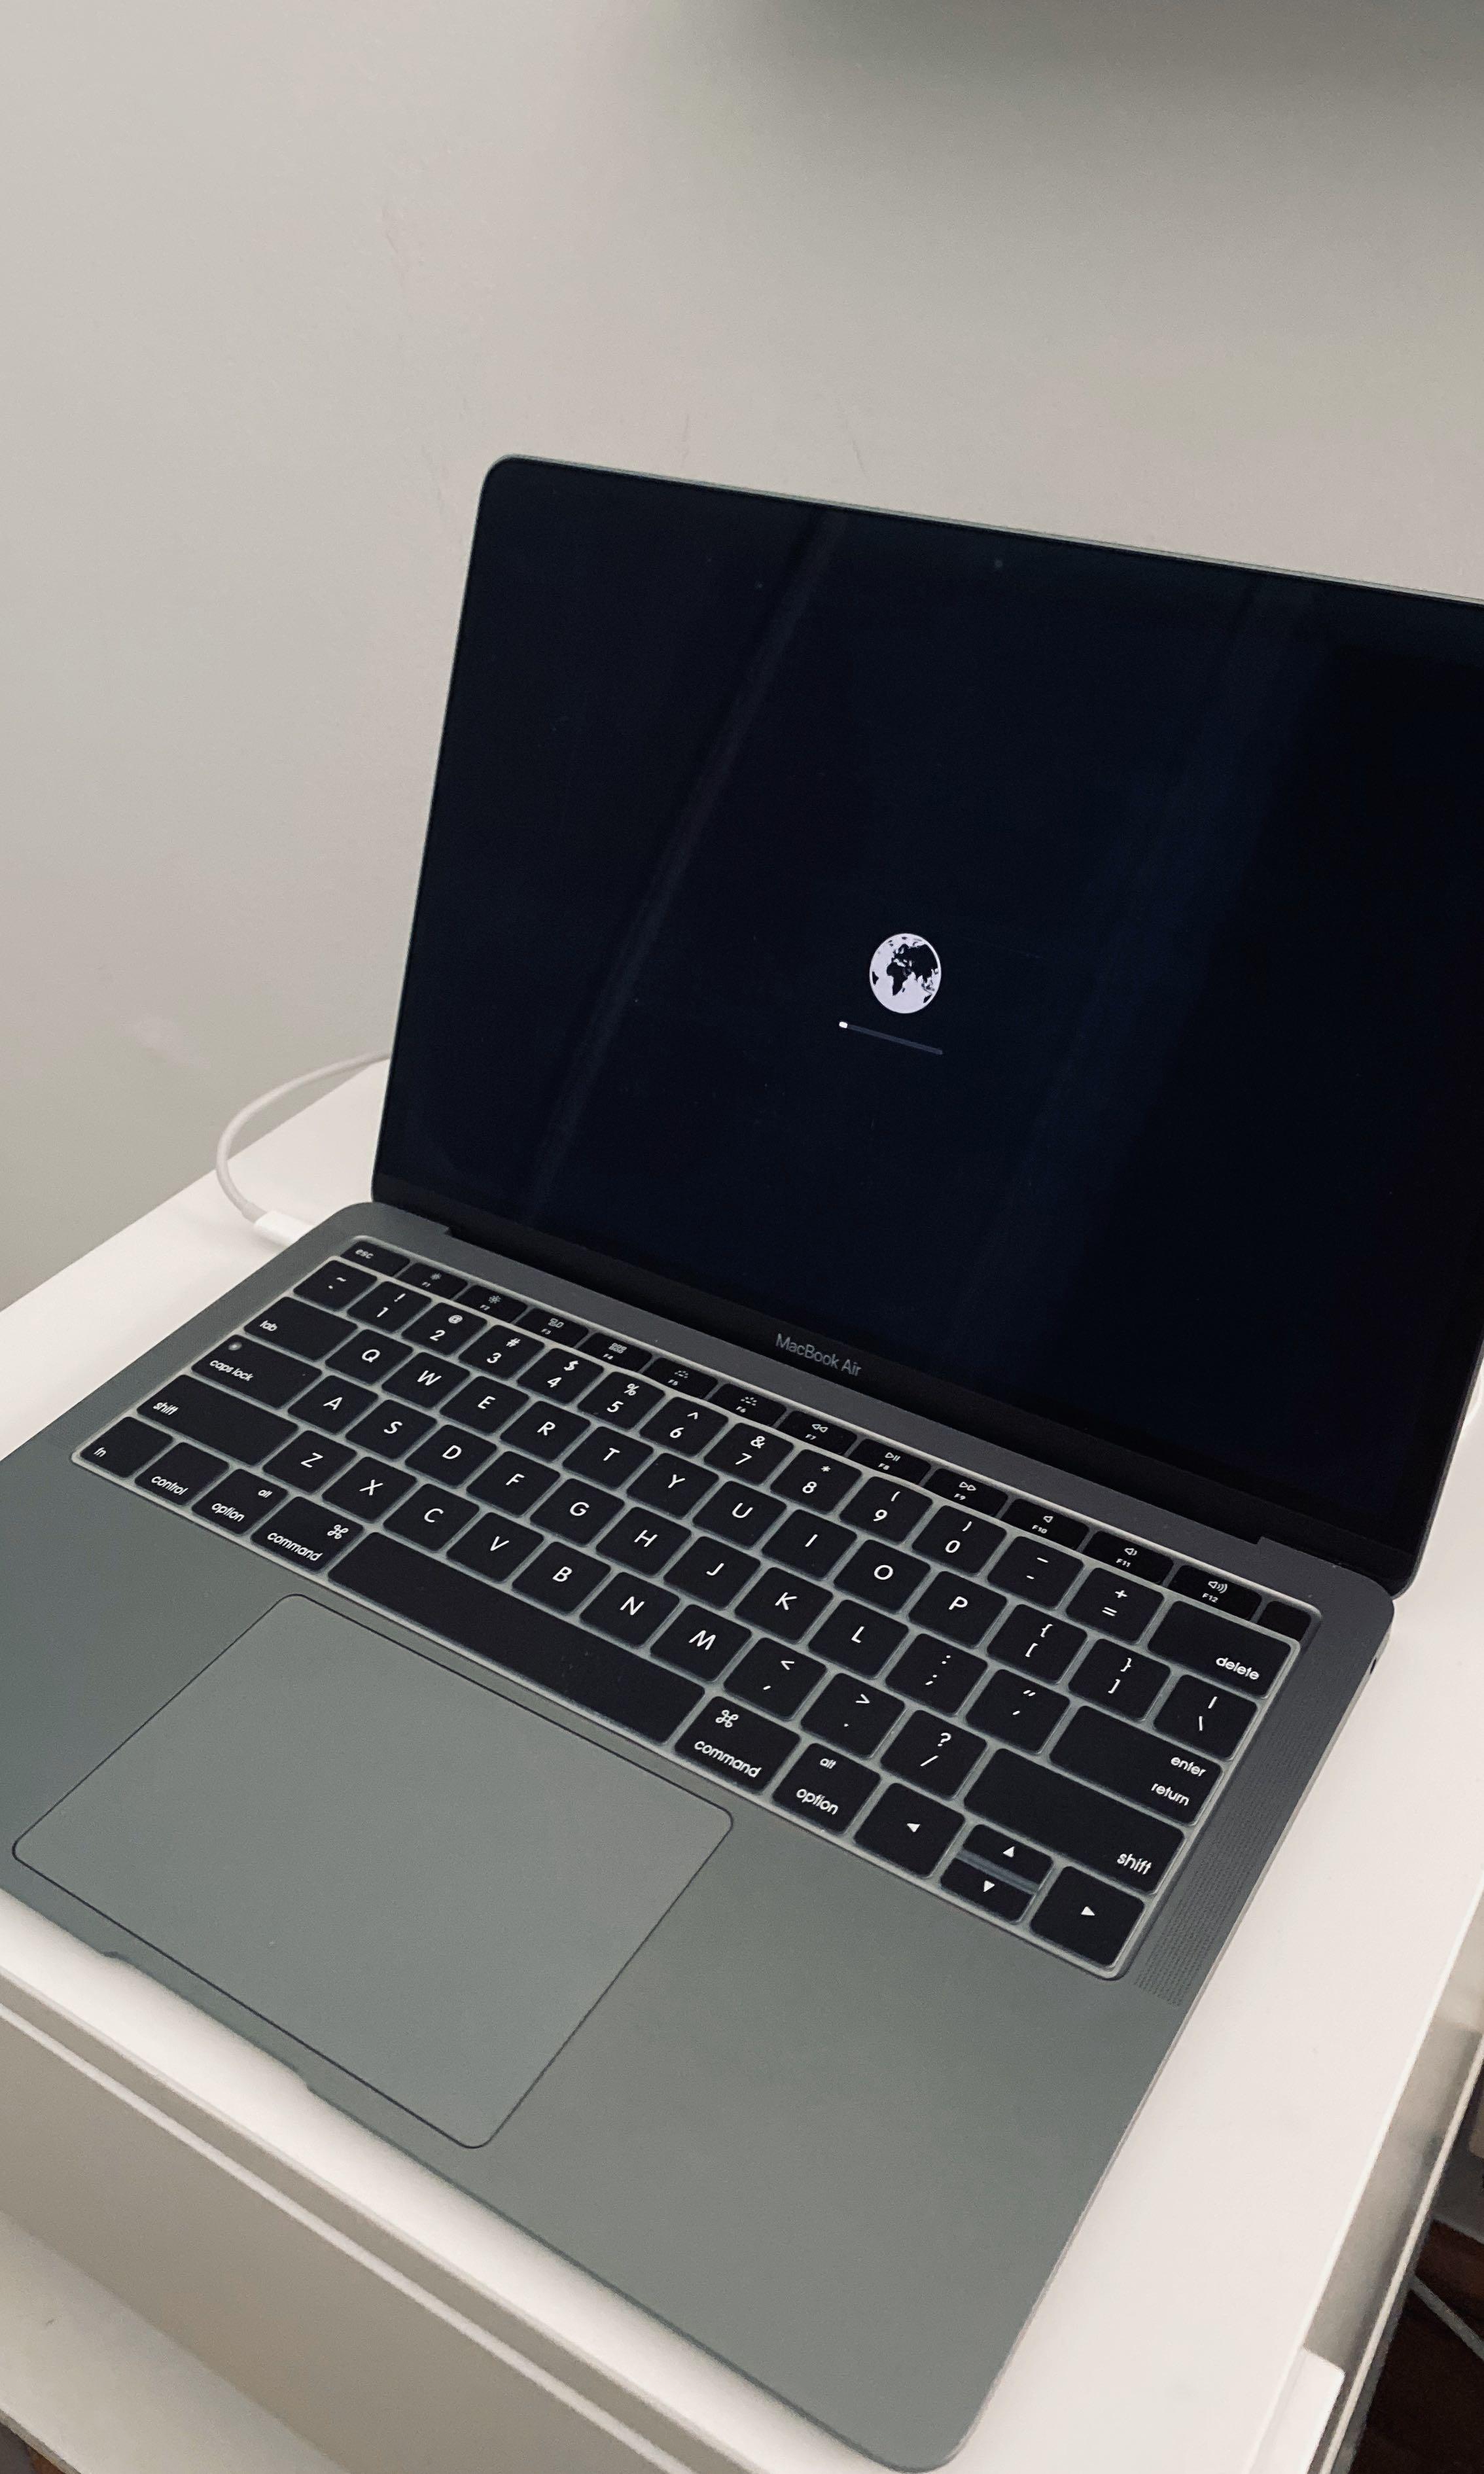 Apple MacBook Air 2019 space grey 8gb memory 128gb ssd with 